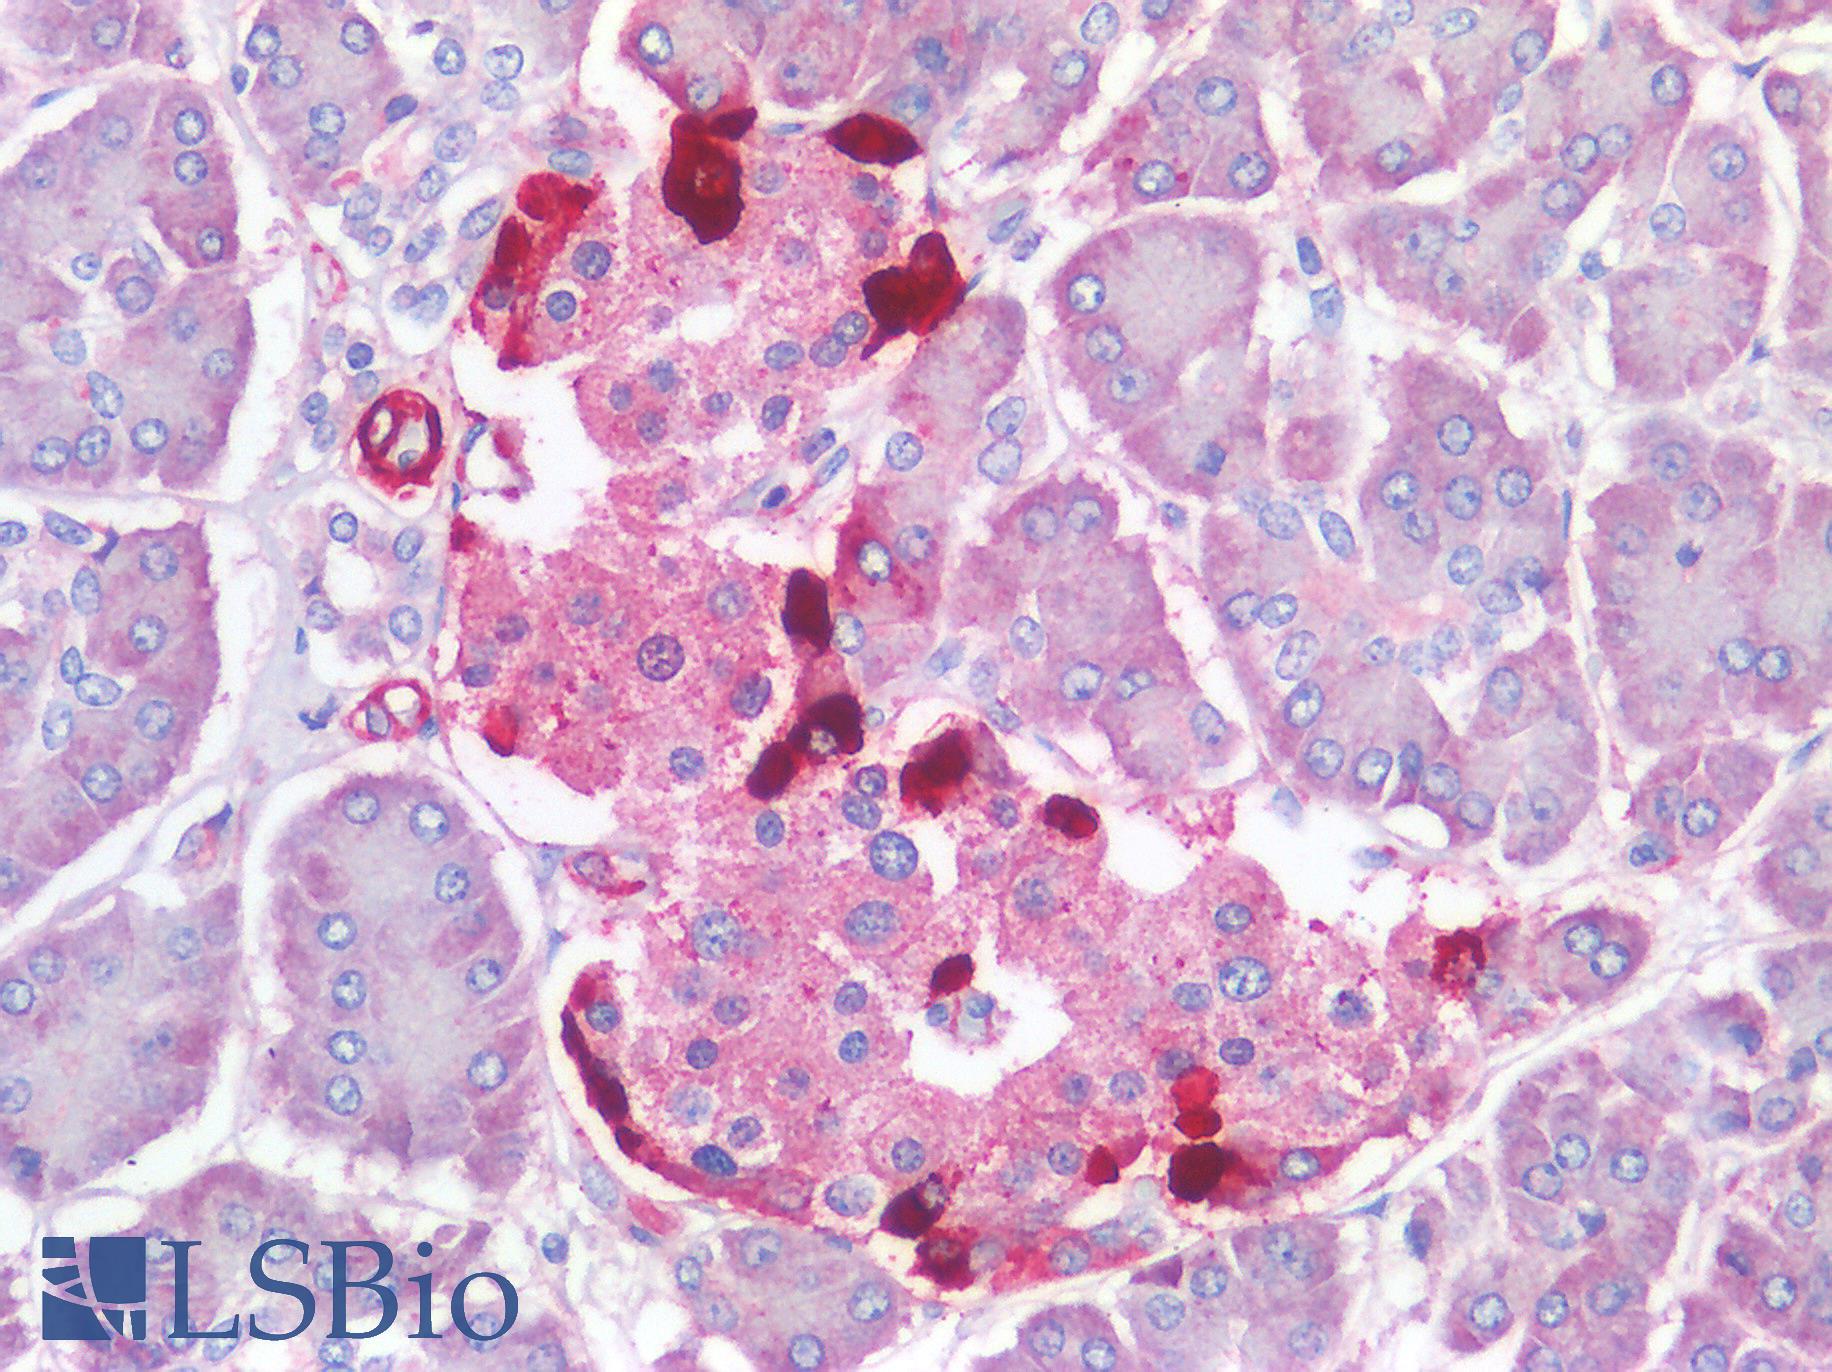 GCG / Glucagon Antibody - Human Pancreas, Islets of Langerhans: Formalin-Fixed, Paraffin-Embedded (FFPE)